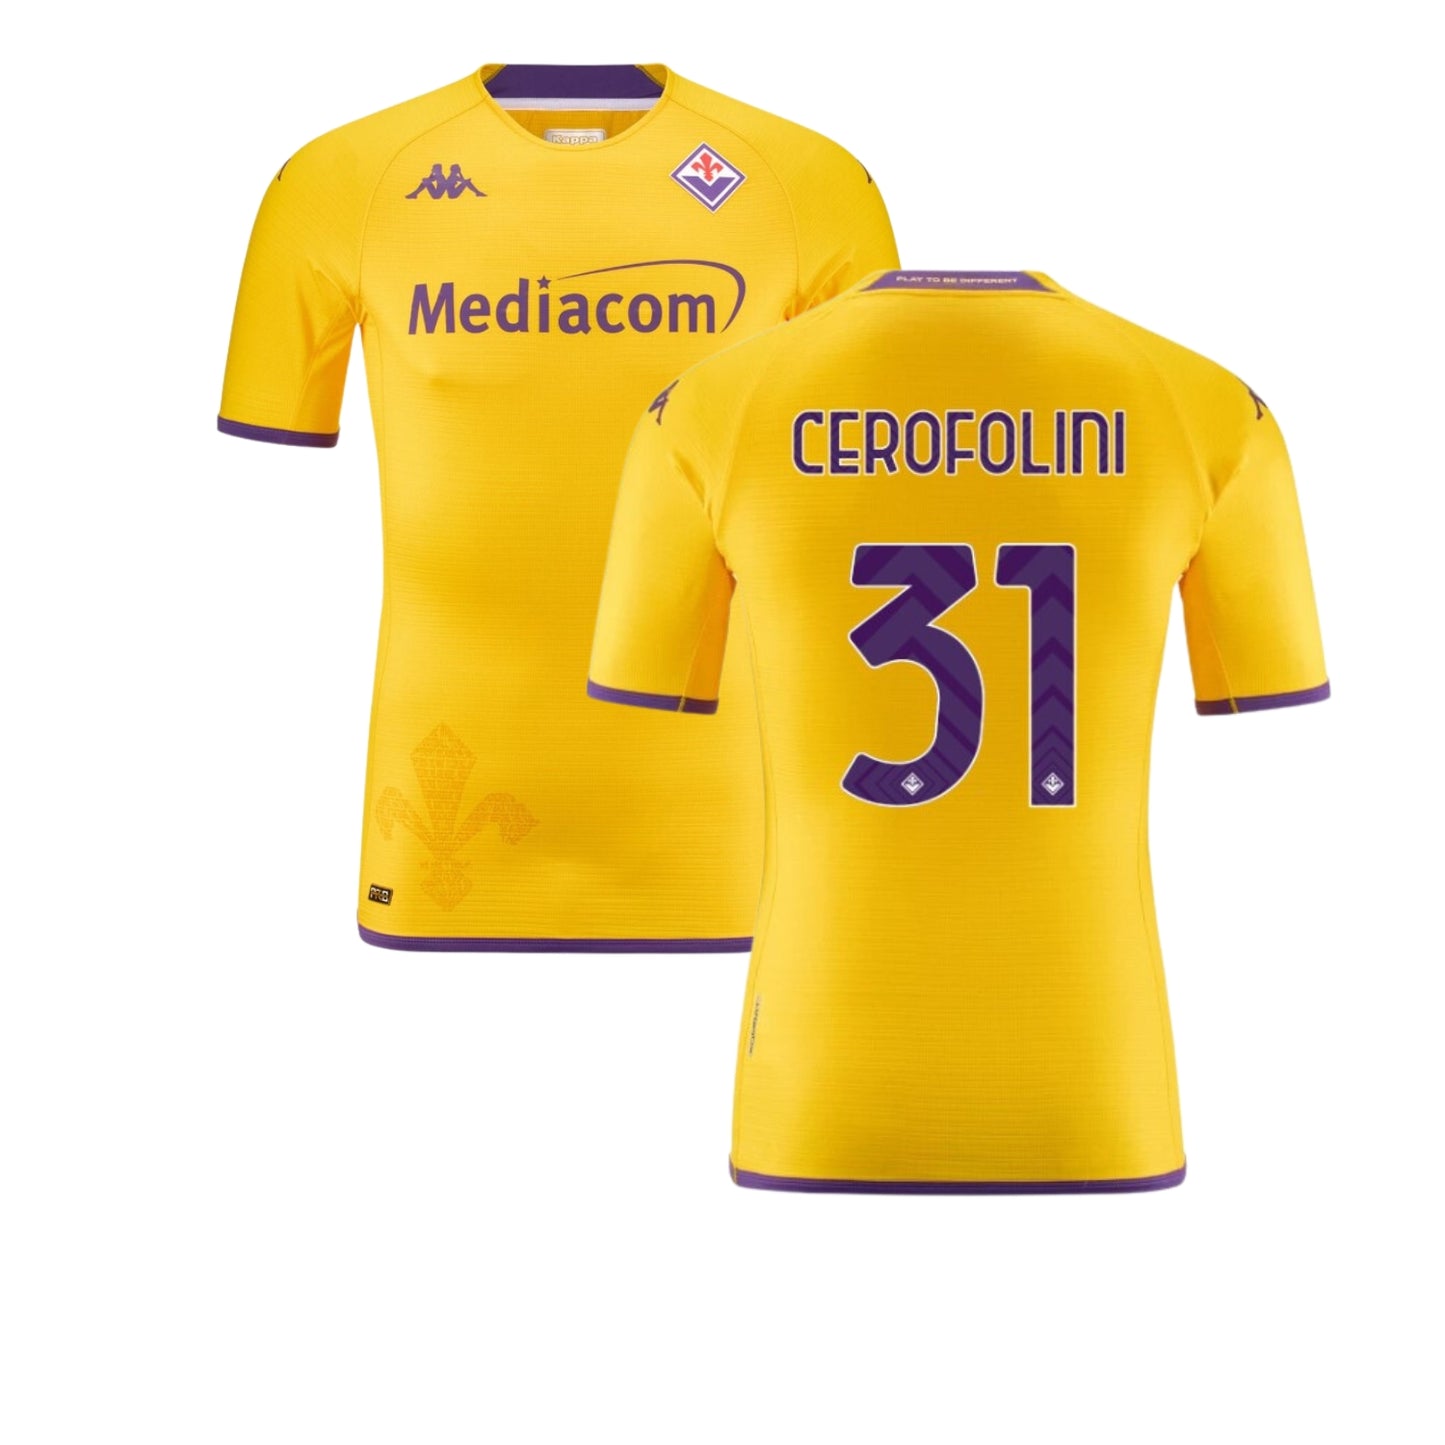 Michele Cerofolini ACF Fiorentina 31 Jersey